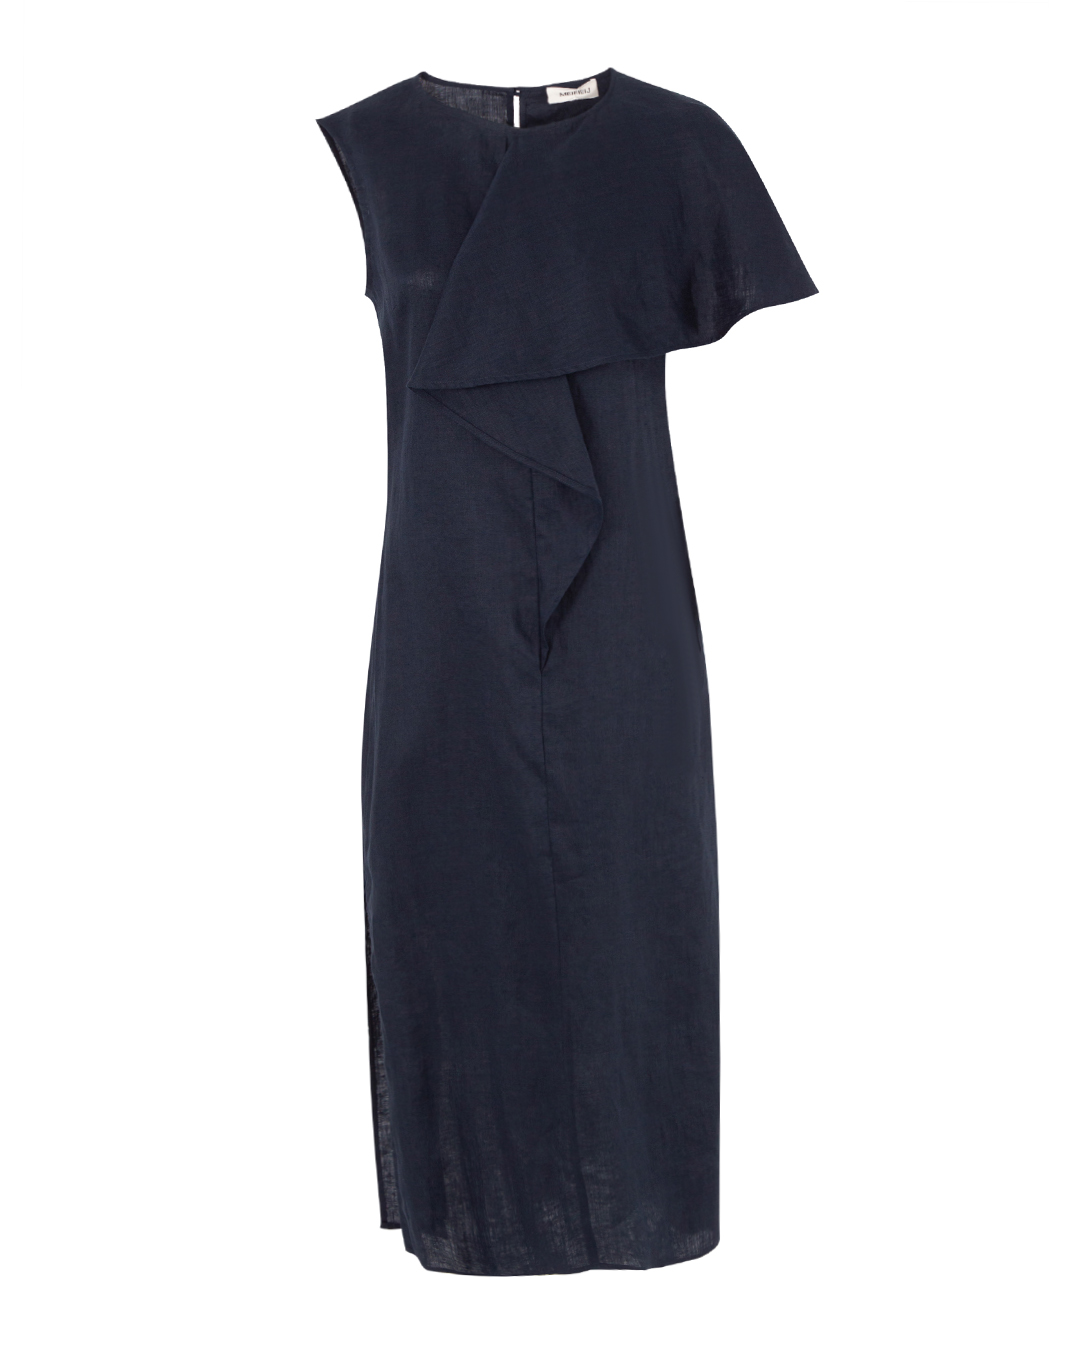 платье MEIMEIJ M4EL10 тем.синий 40, размер 40 - фото 1